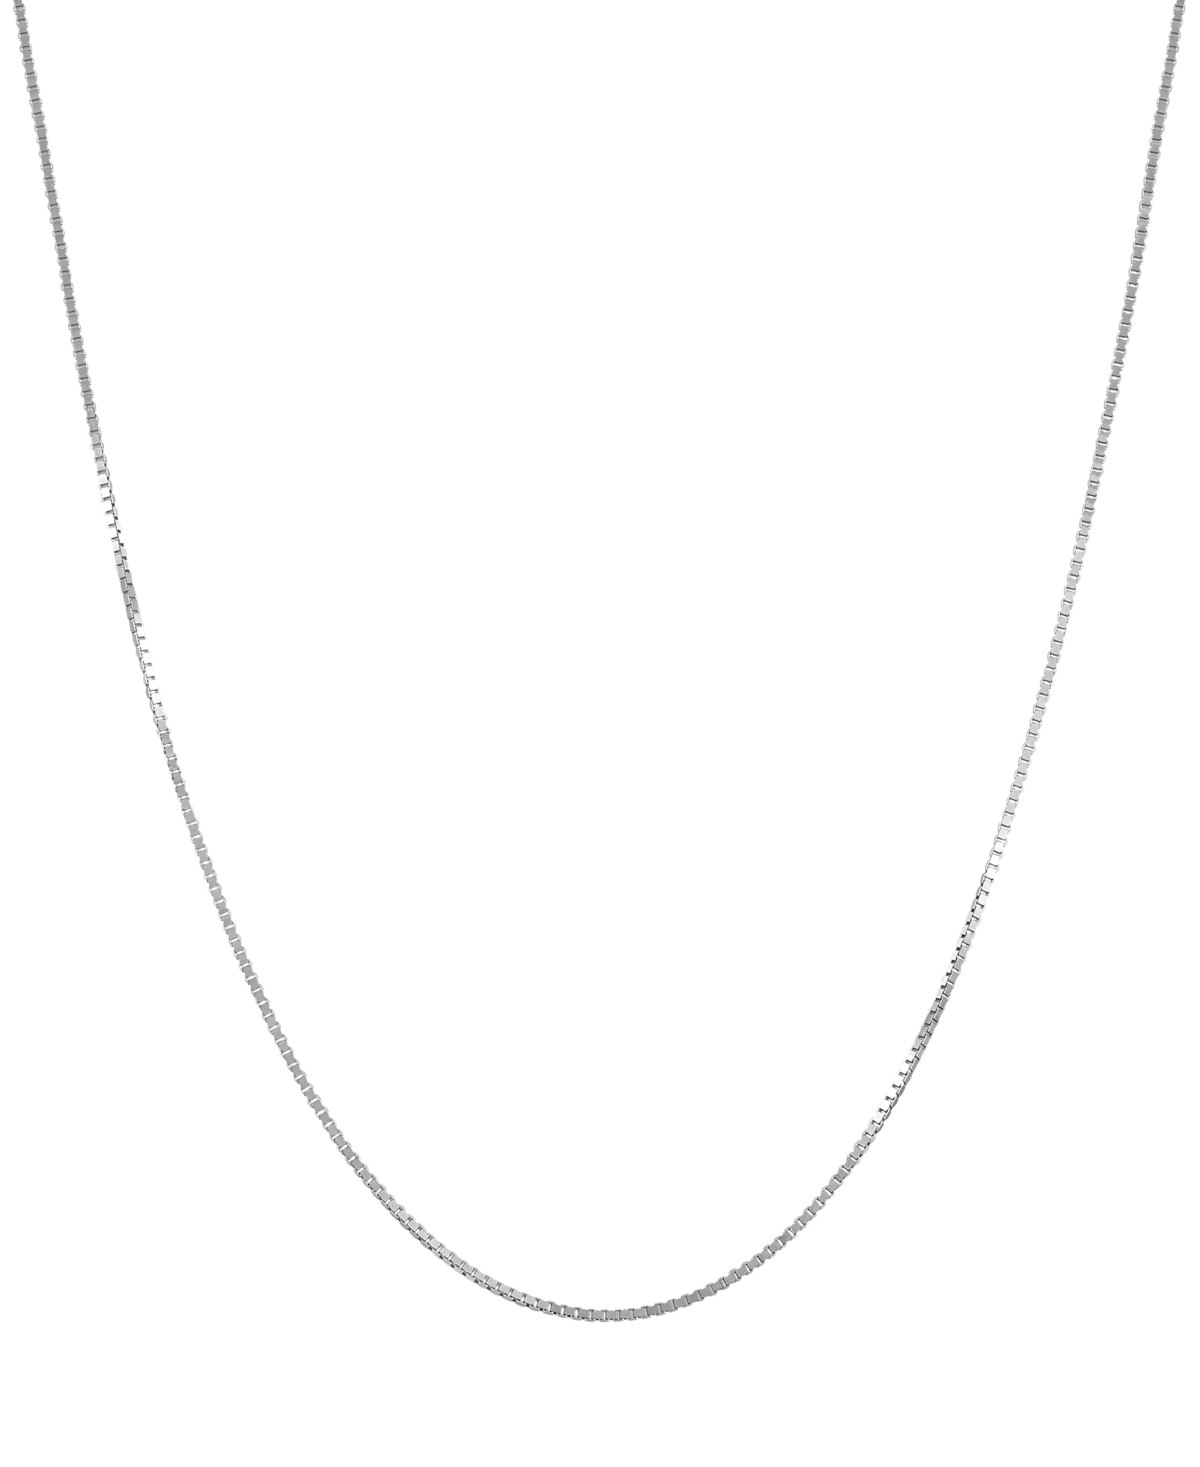 Fine Box Link 18" Chain Necklace in 14k White Gold - White Gold